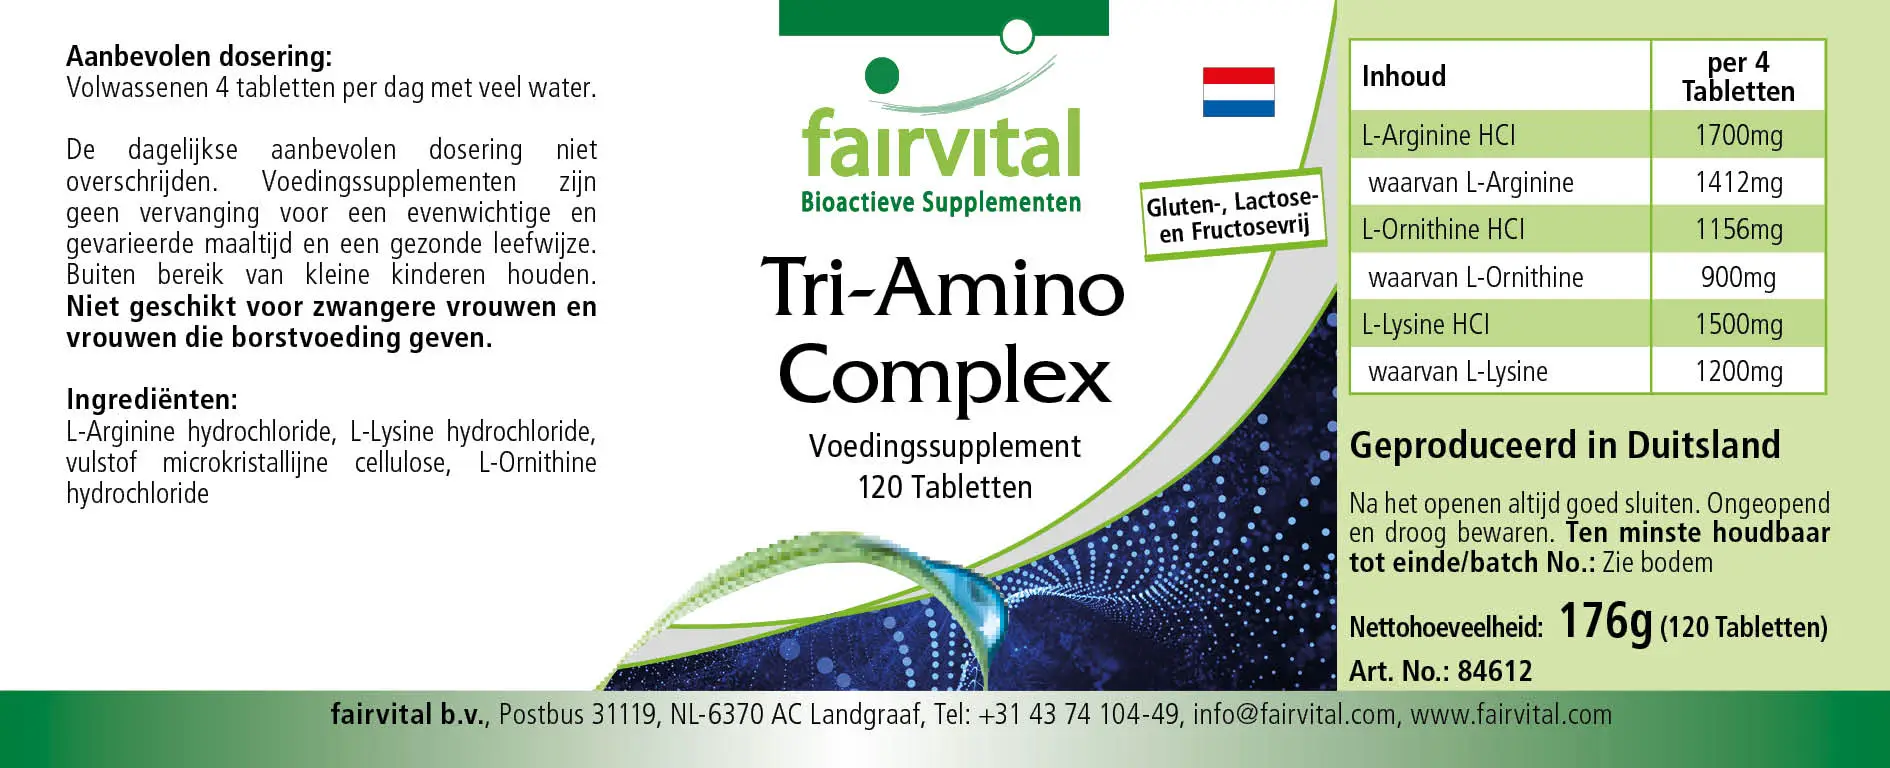 Tri-Amino-Komplex